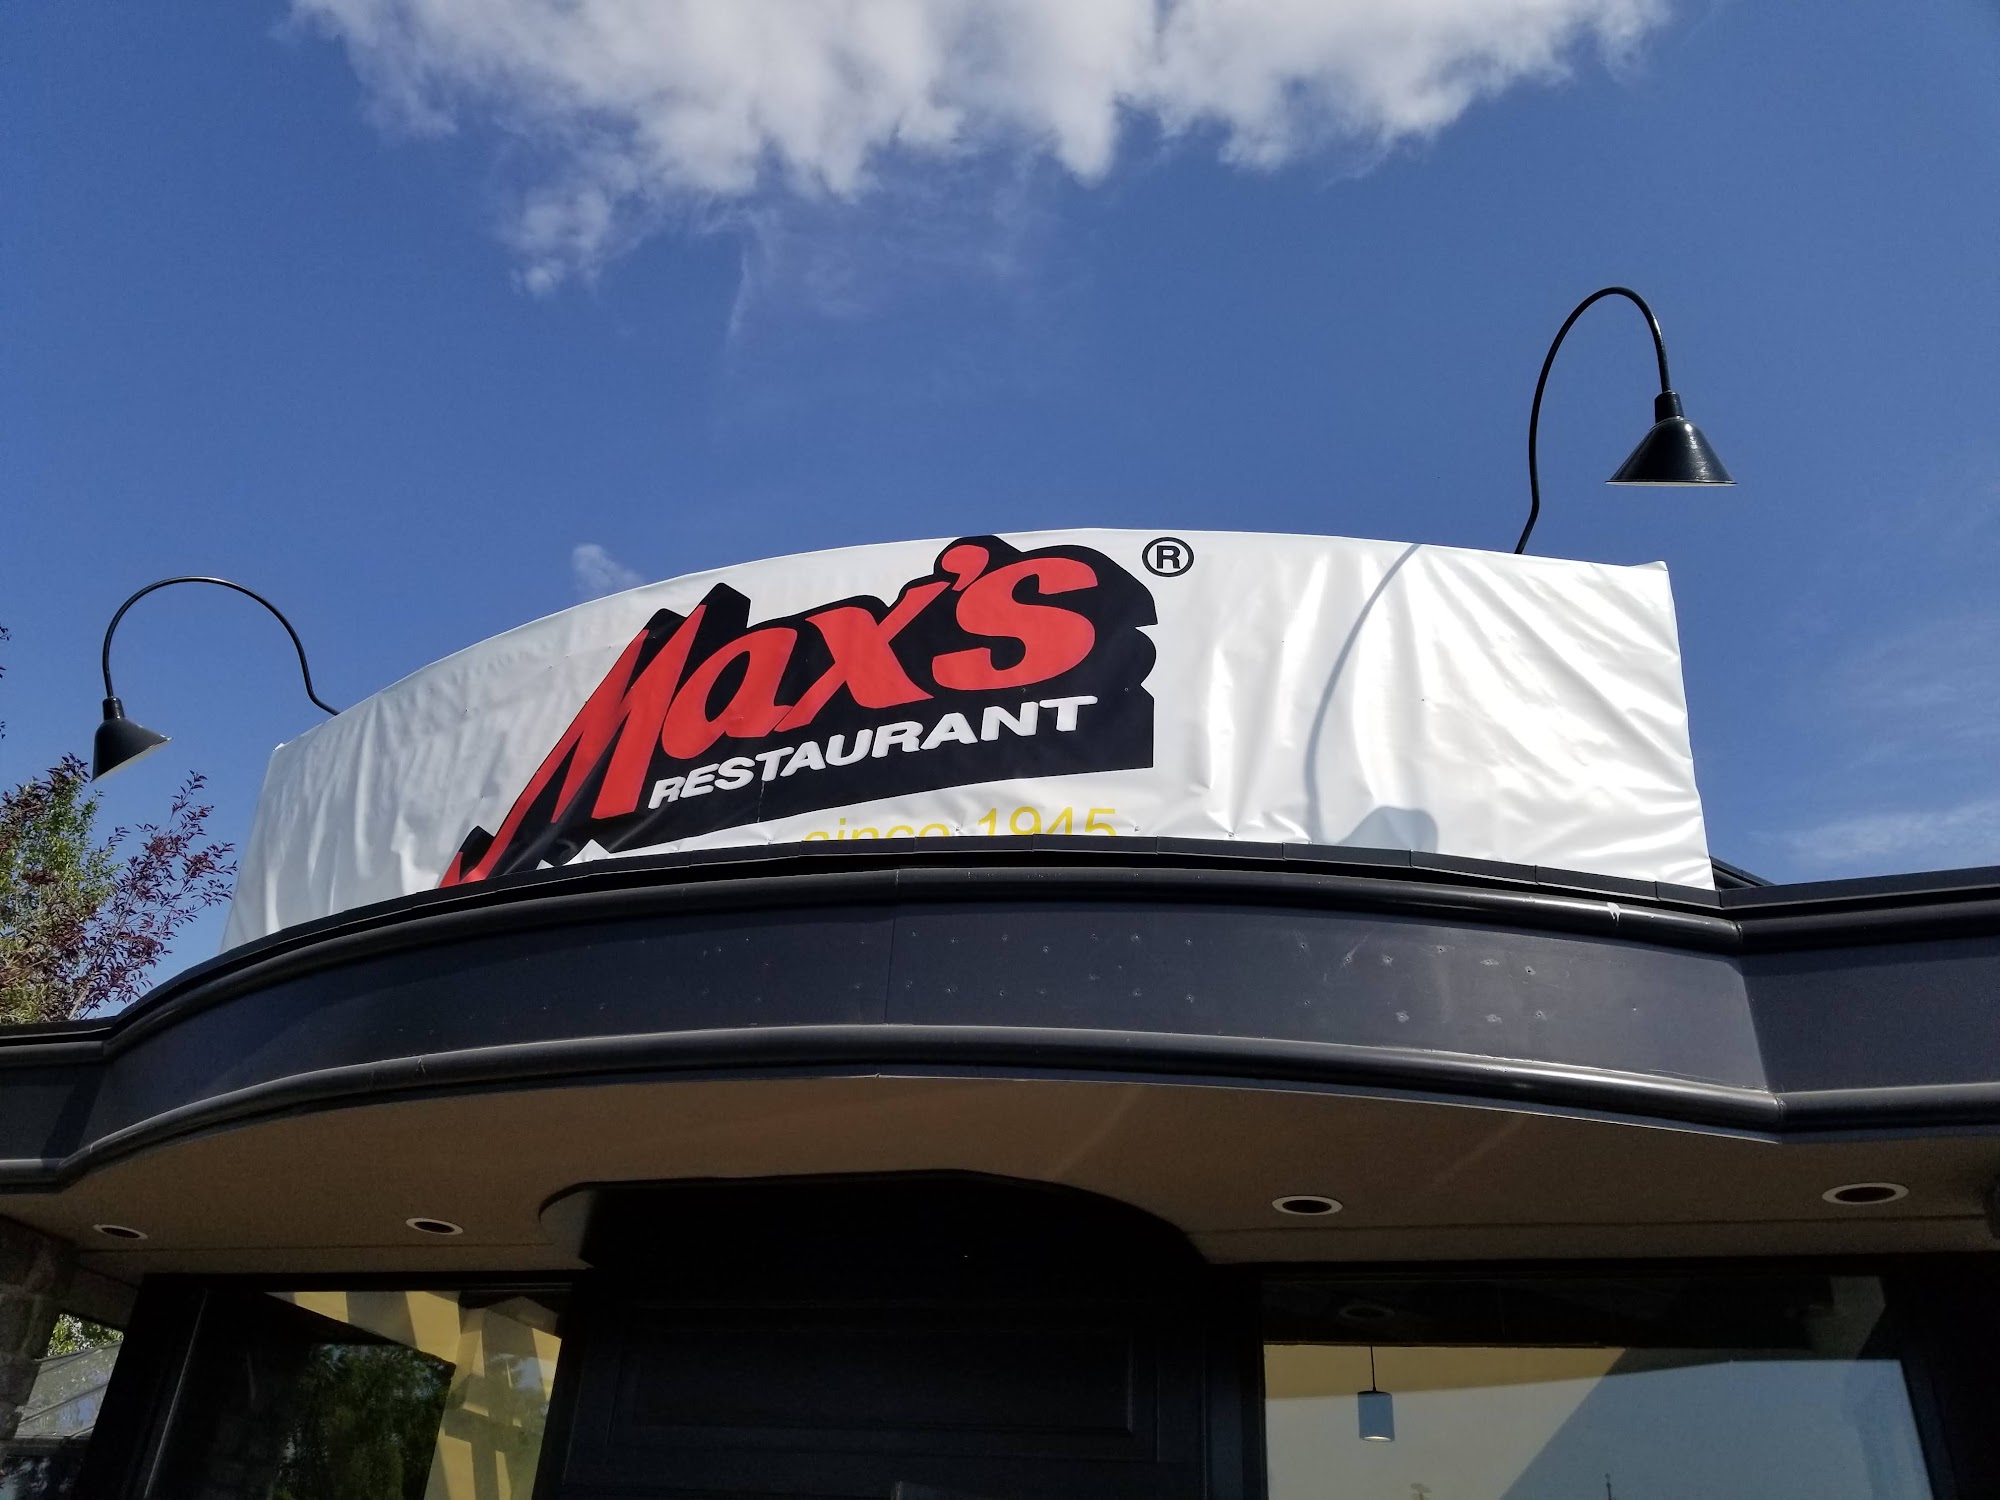 Max's Restaurant, Cuisine of the Philippines, Calgary